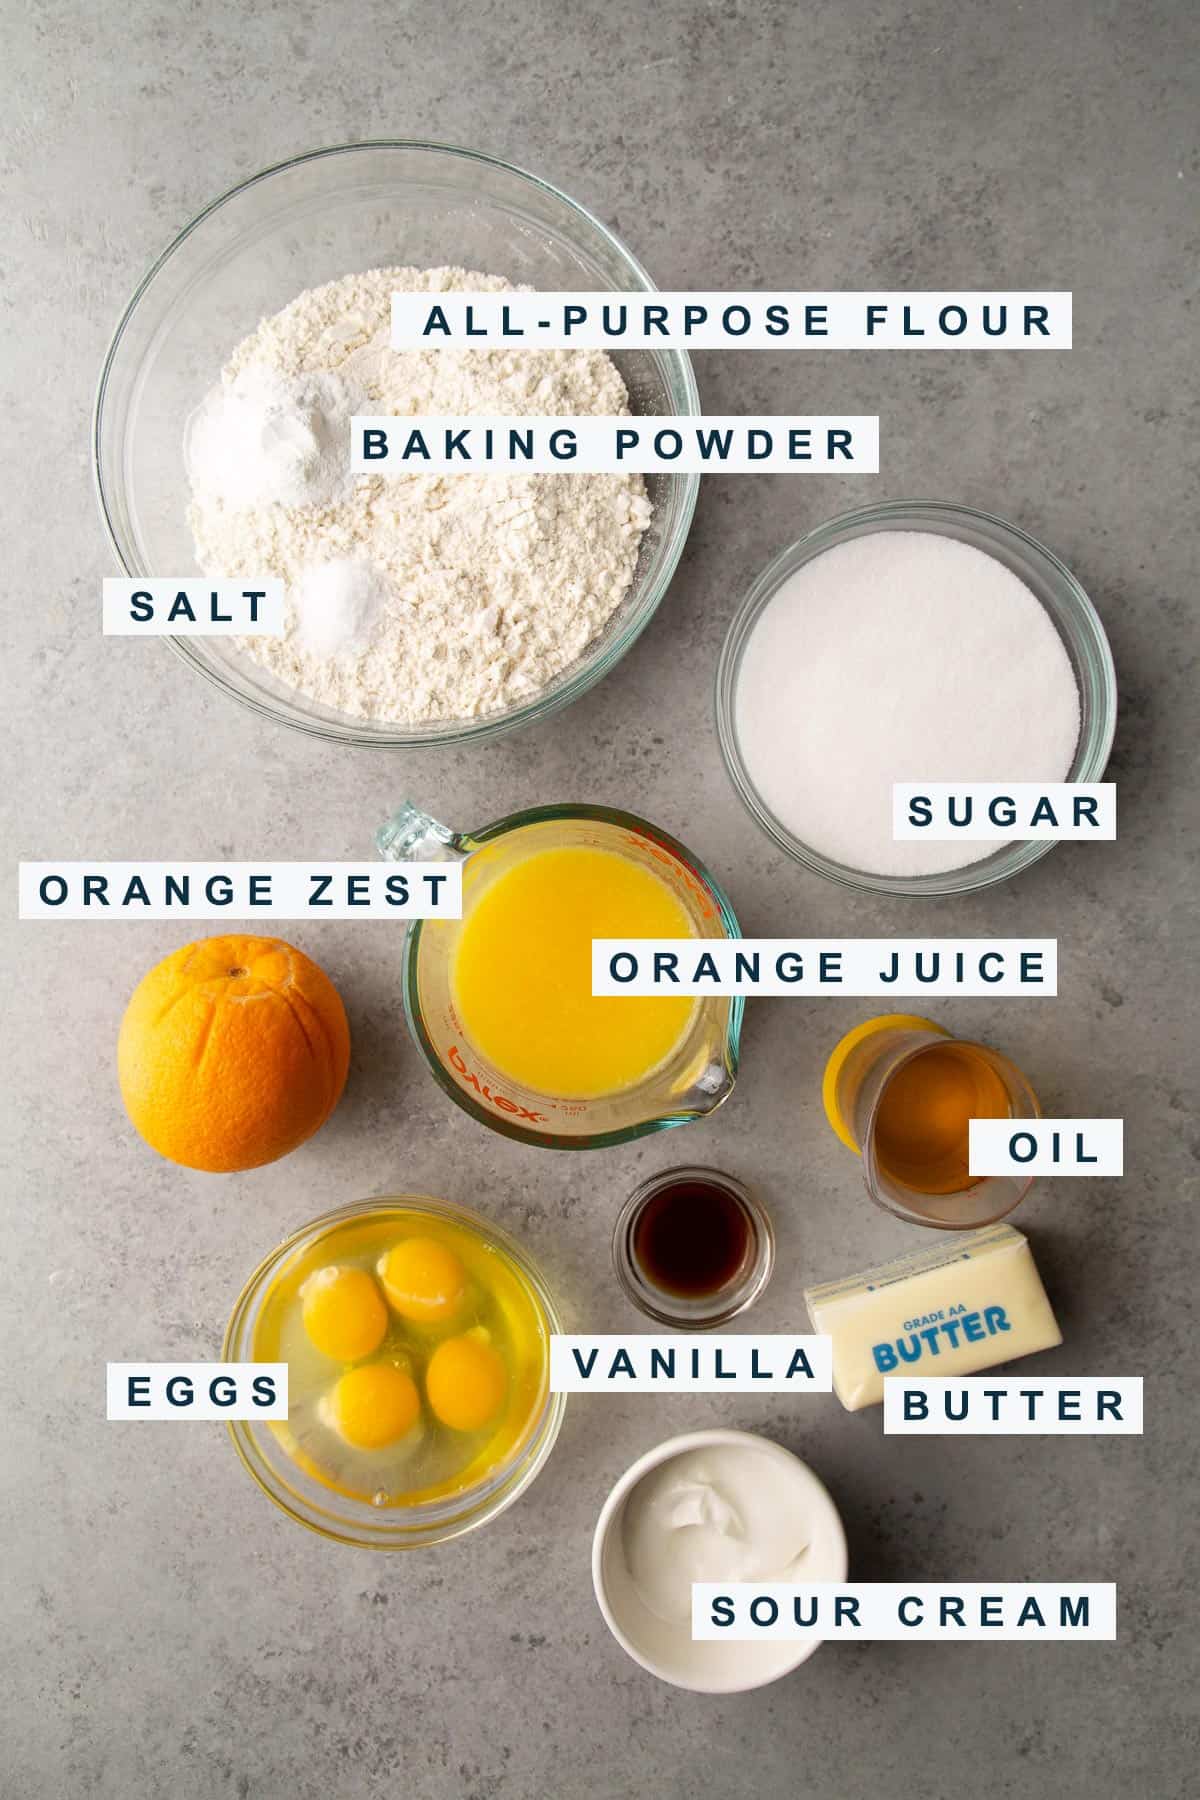 orange cake ingredients include flour, orange juice, eggs, butter, and oil.